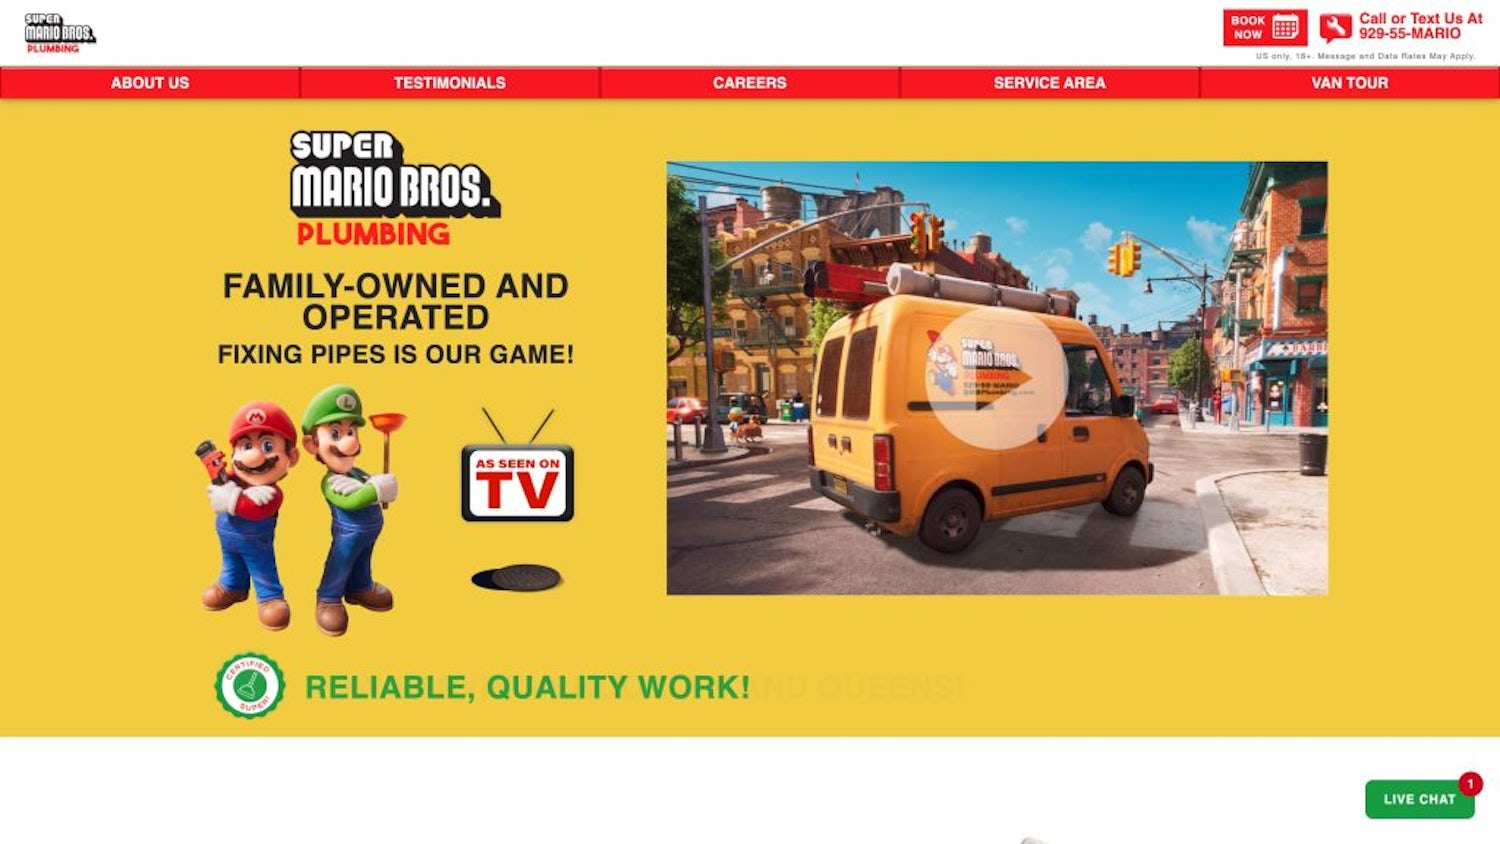 The Super Mario Bro. plumbing homepage